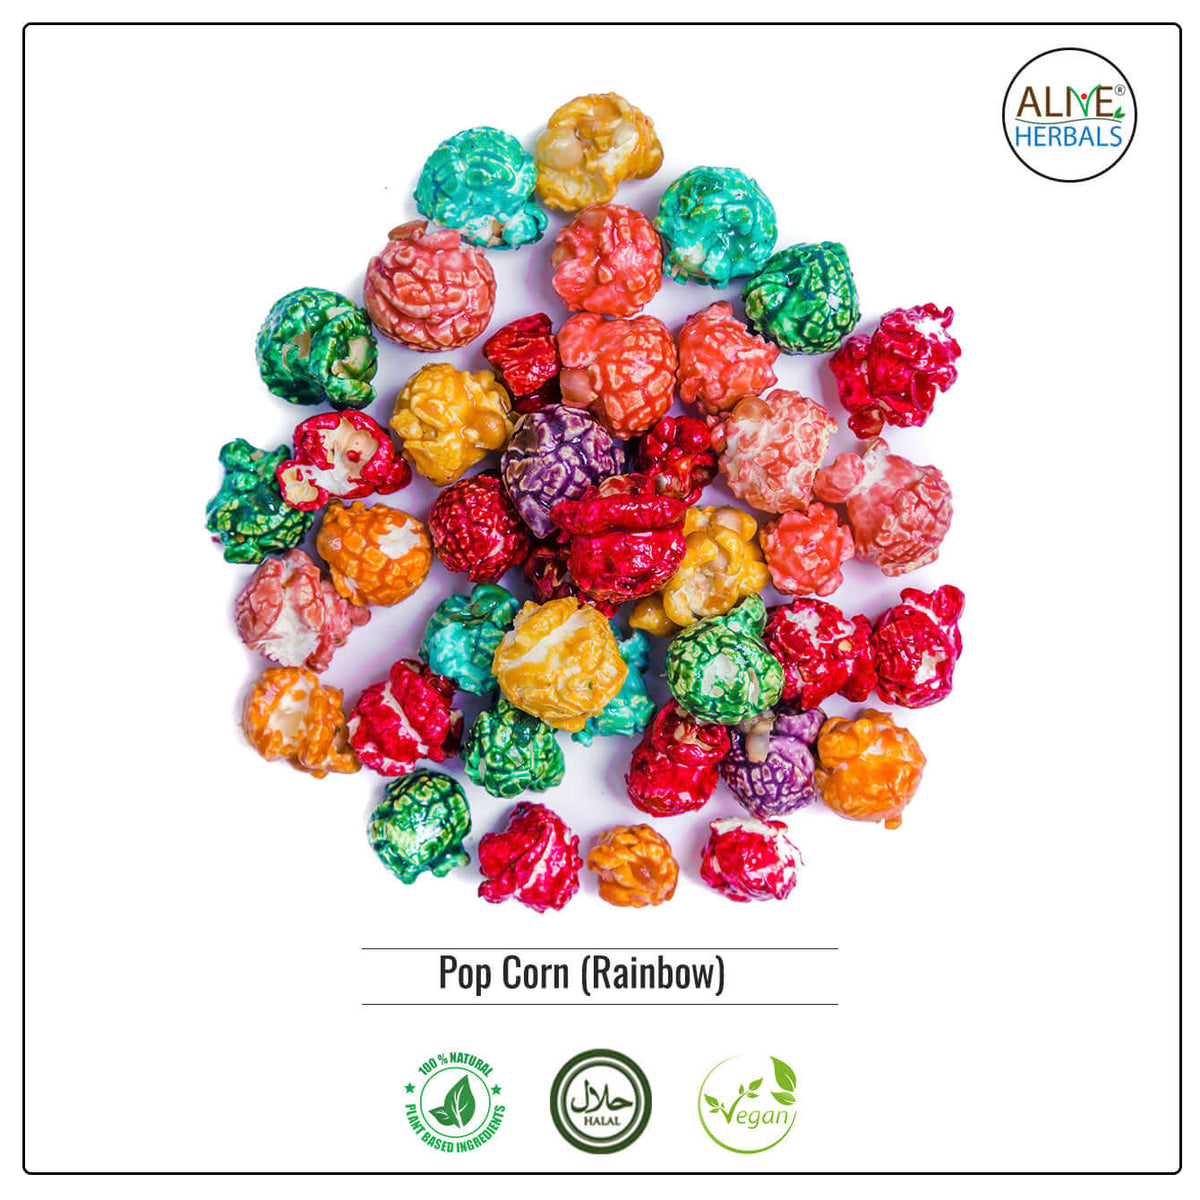 Pop Corn (Rainbow) - Shop at Natural Food Store | Alive Herbals.